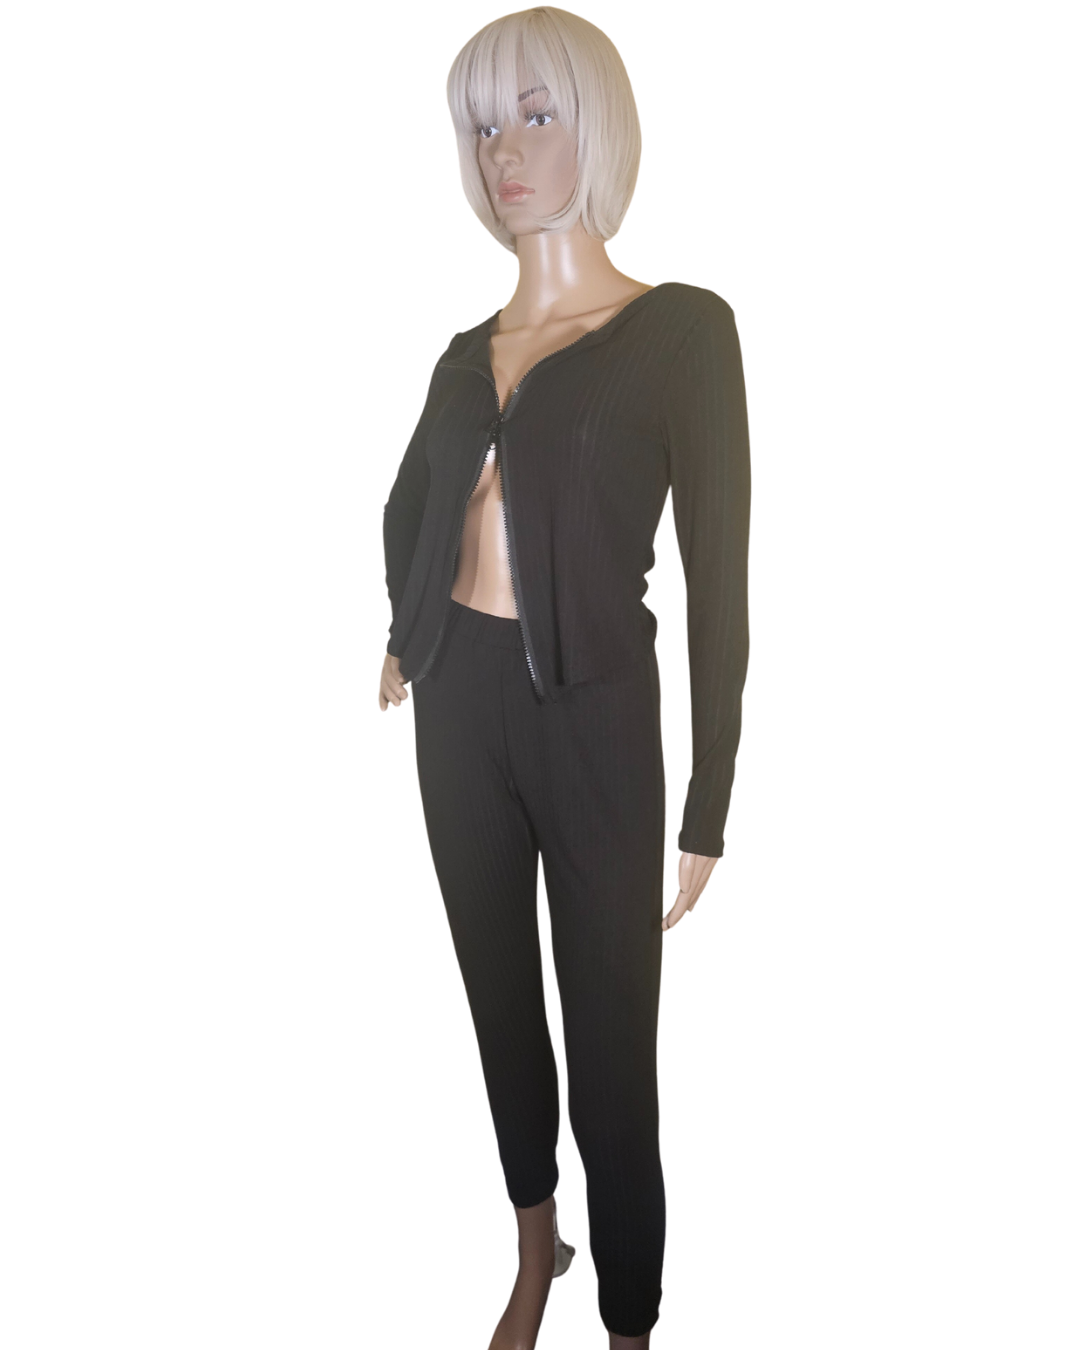 Women Regular Size Ribbed Zip Front Long Sleeve Top & Leggings Set – Dvine  Timing Collection LLC®️